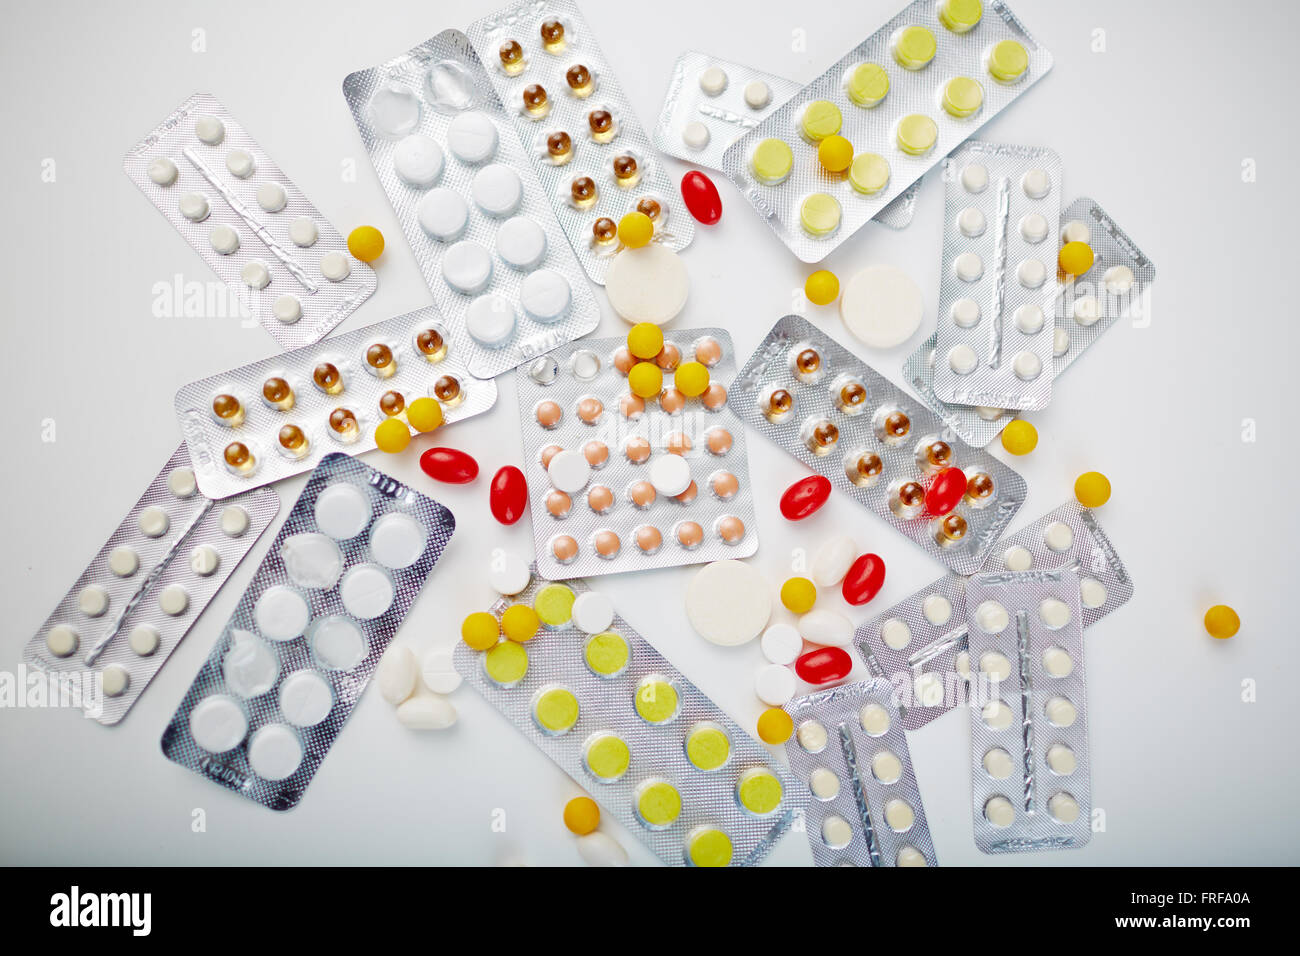 Pharmaceutical assortment Stock Photo